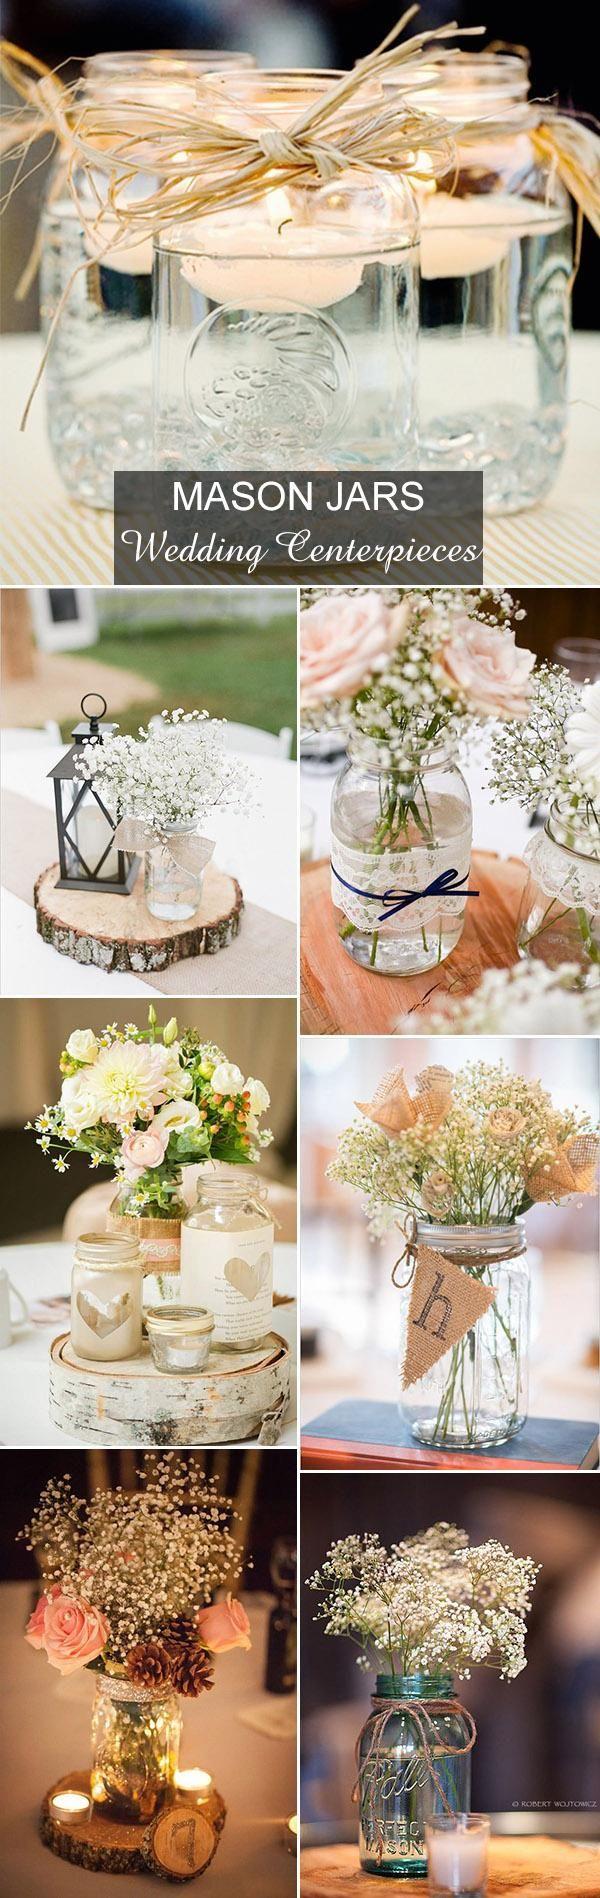 زفاف - Country Rustic Mason Jars Inspired Wedding Centerpieces Ideas